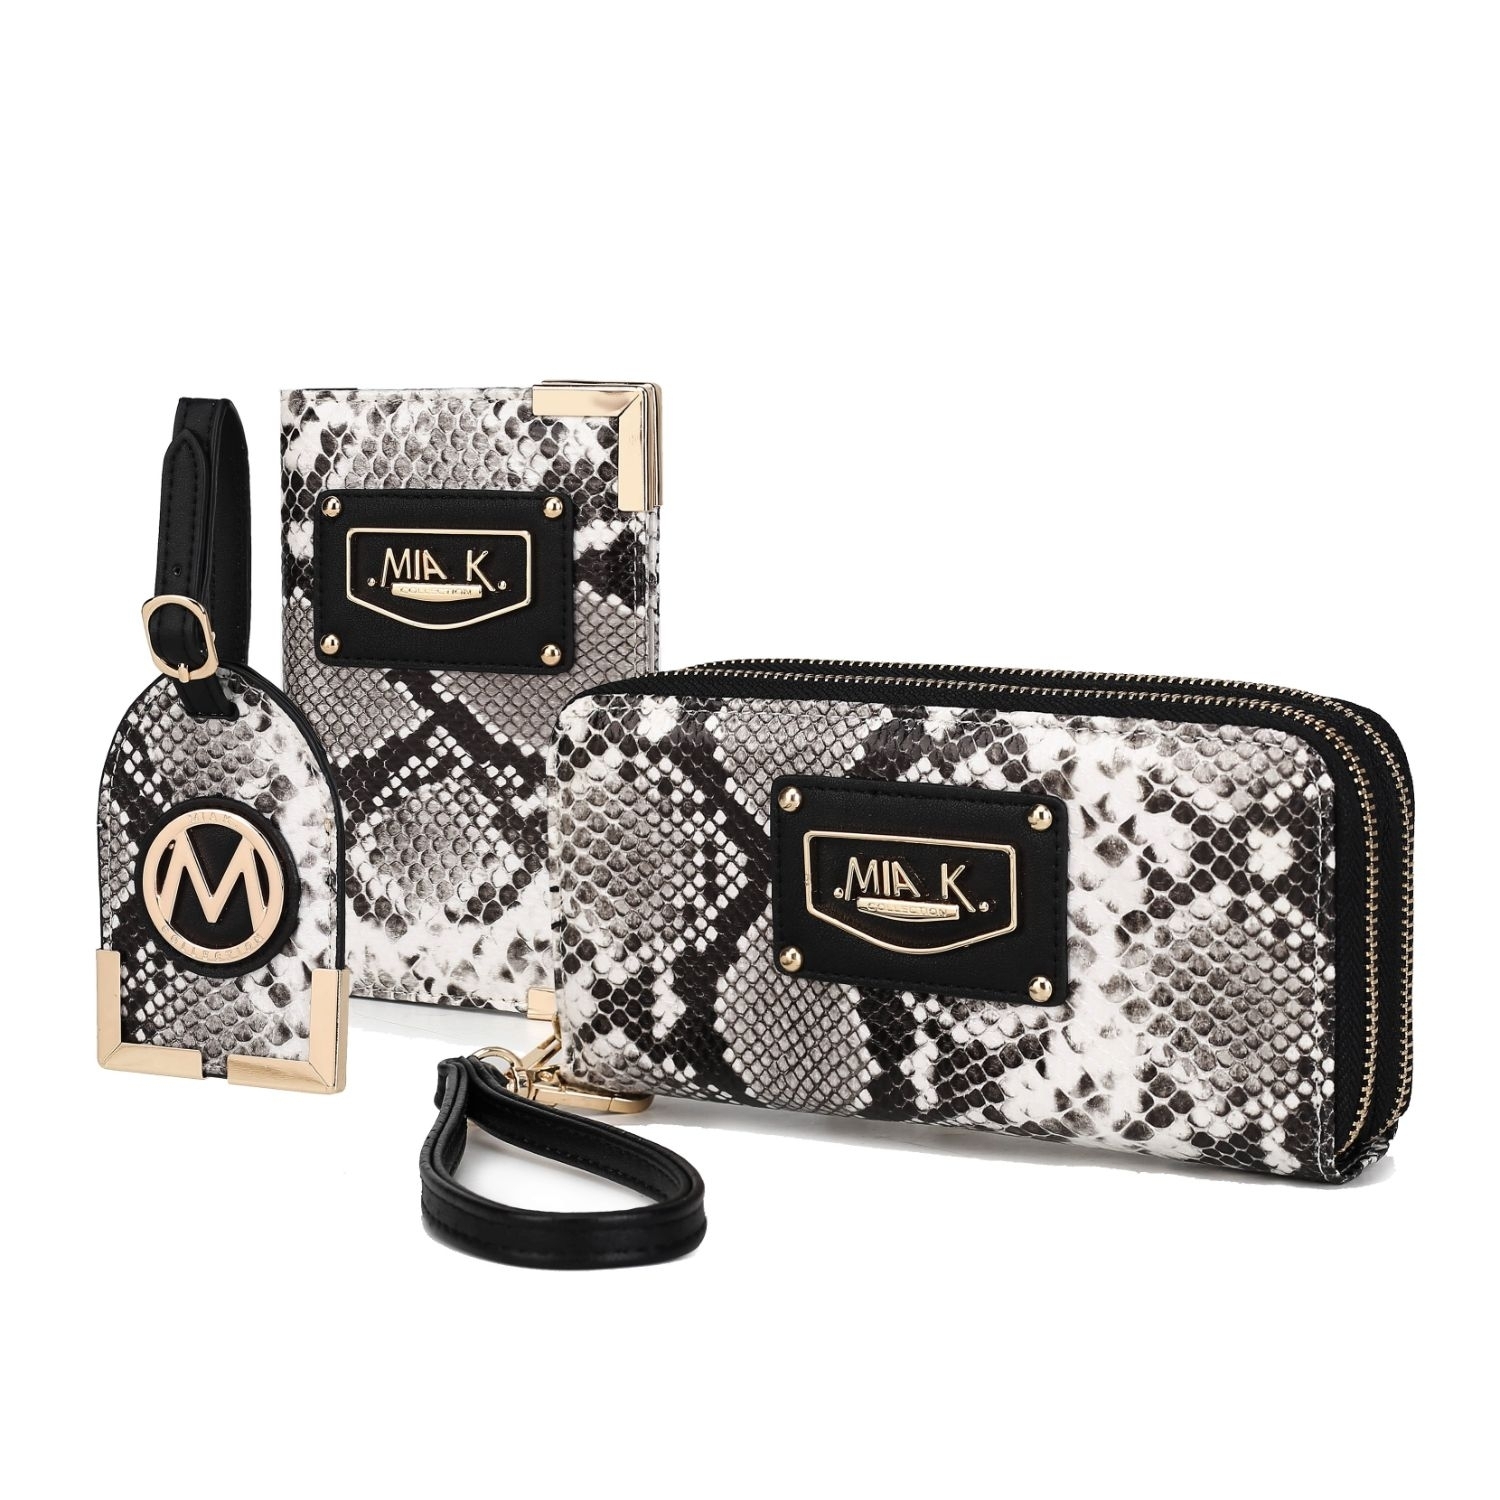 MKF Collection Darla Snake Travel Gift Set Handbag By Mia K 3 Pieces - Beige